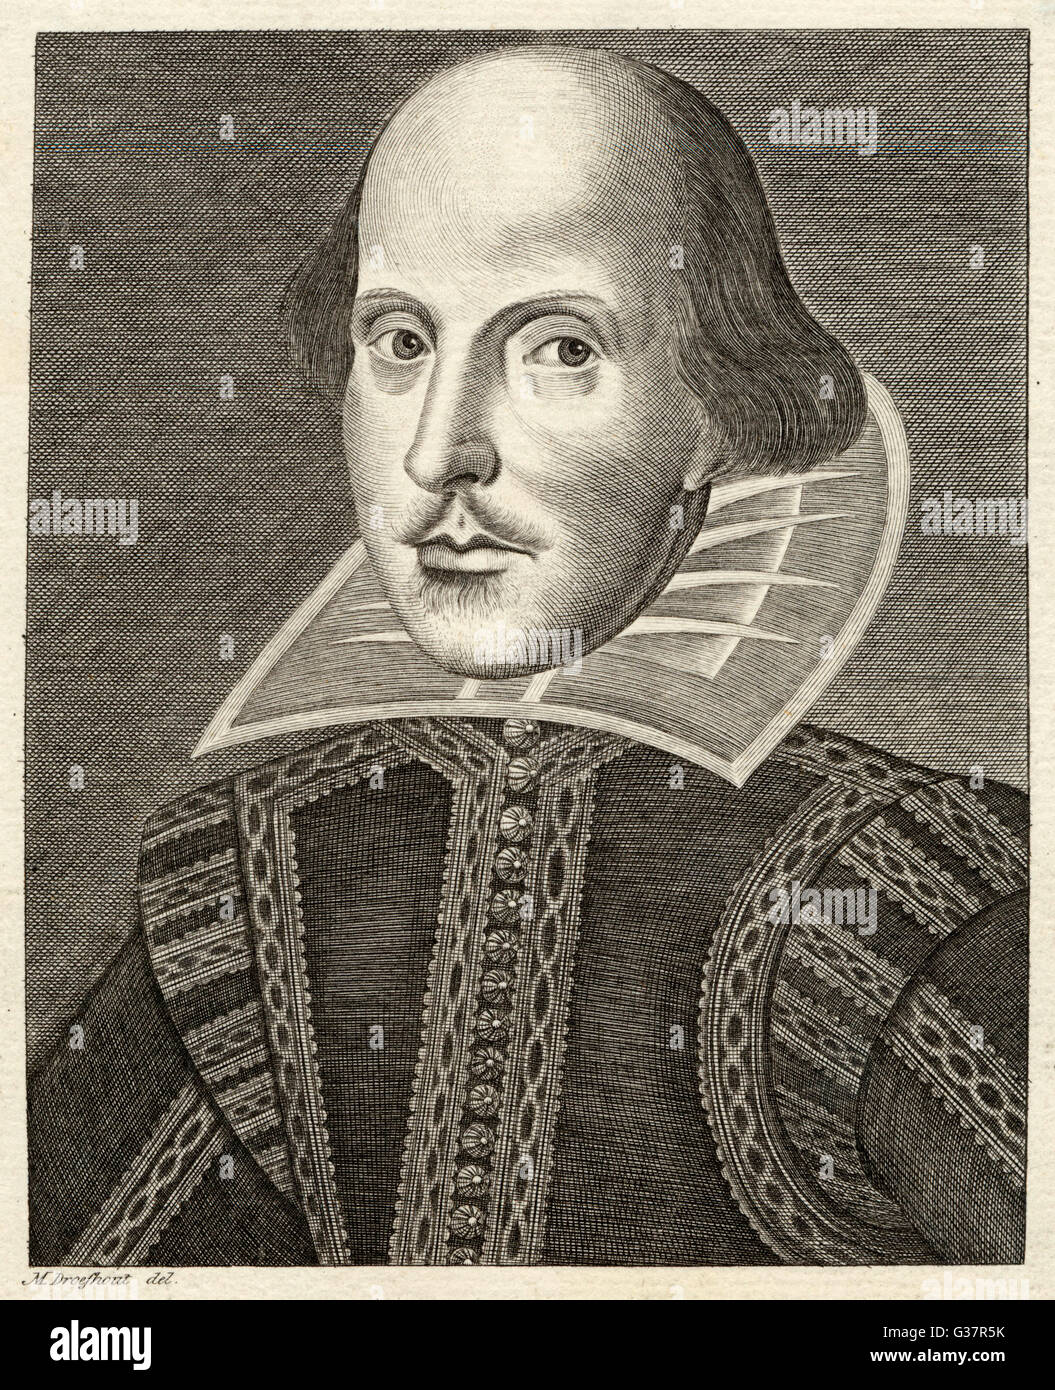 William Shakespeare (1564-1616) Playwright and poet. Stock Photo